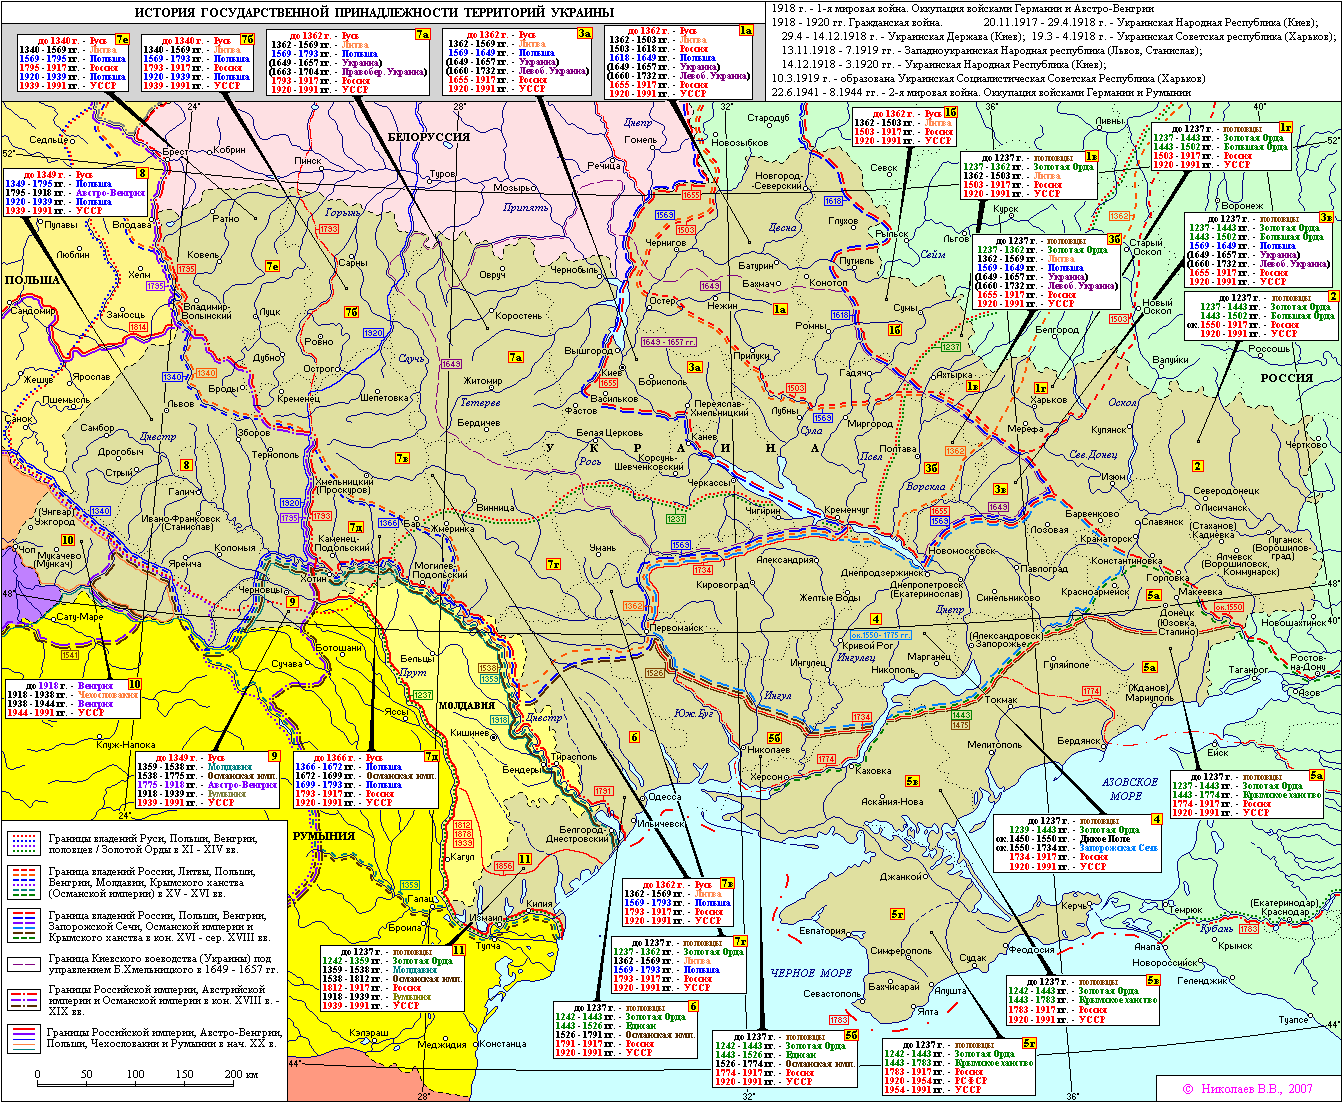 ukraine1991